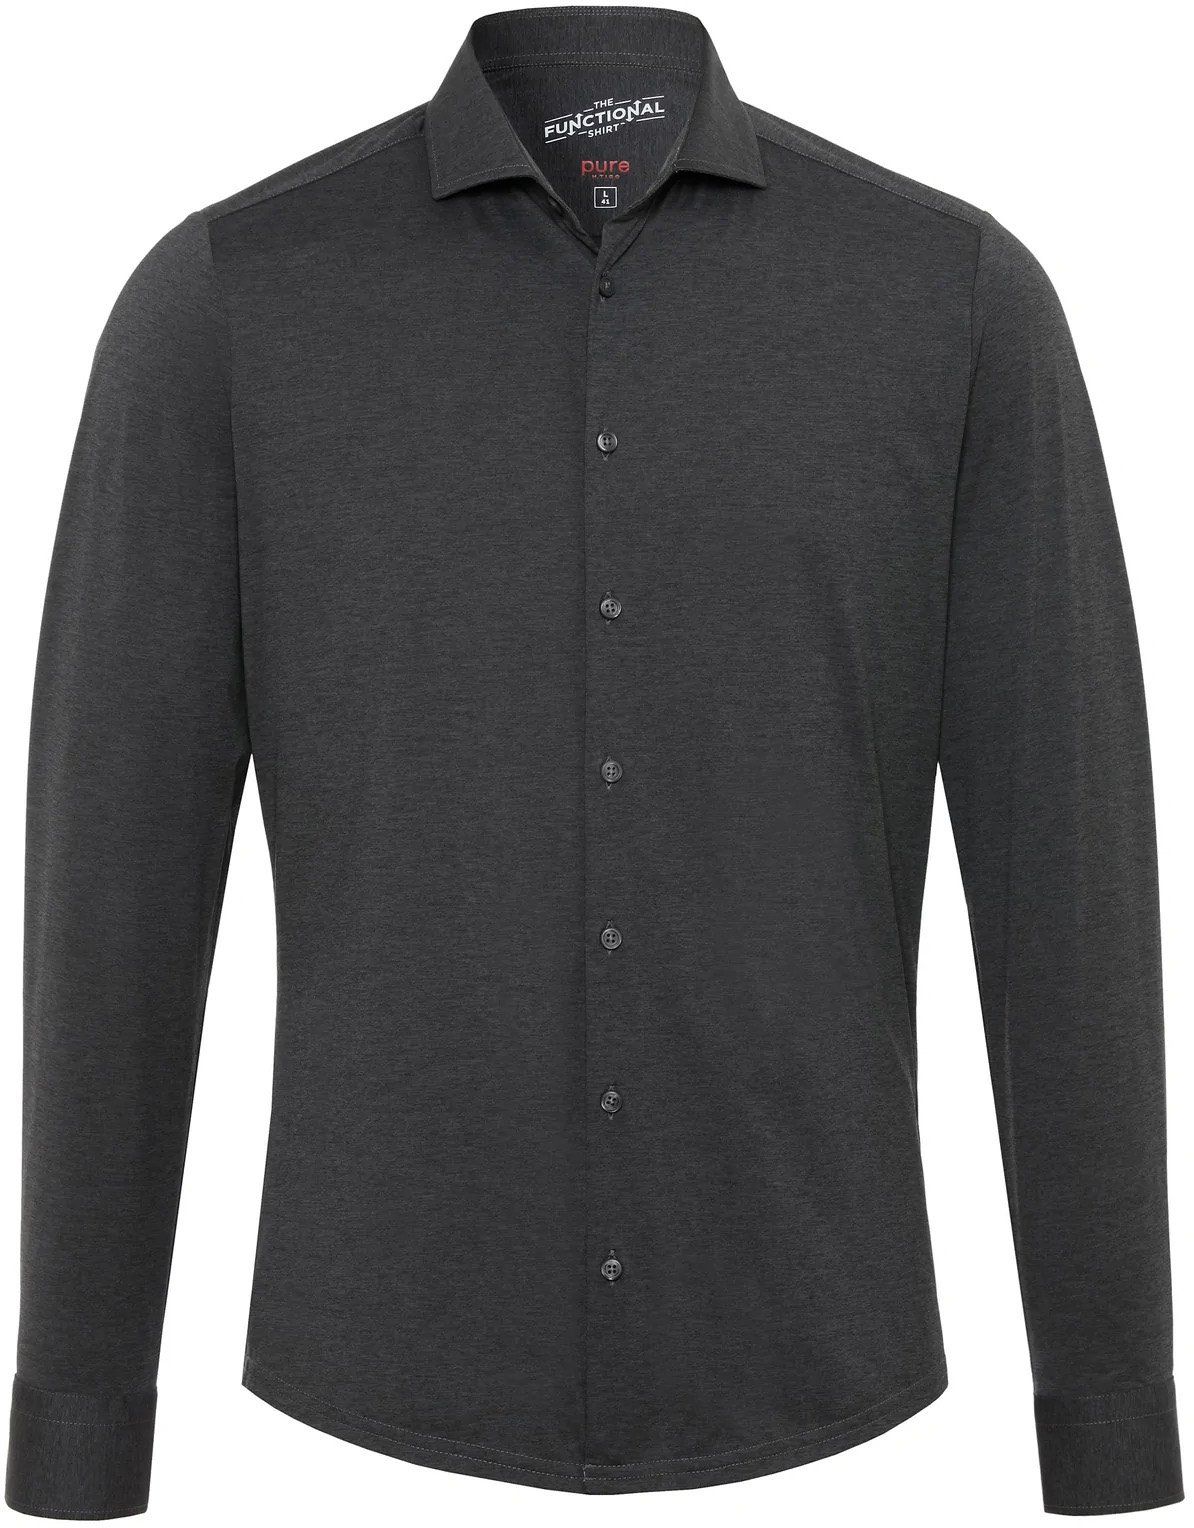 Pure H.Tico The Functional Dark Shirt Grey Dark Grey size 15 3/4